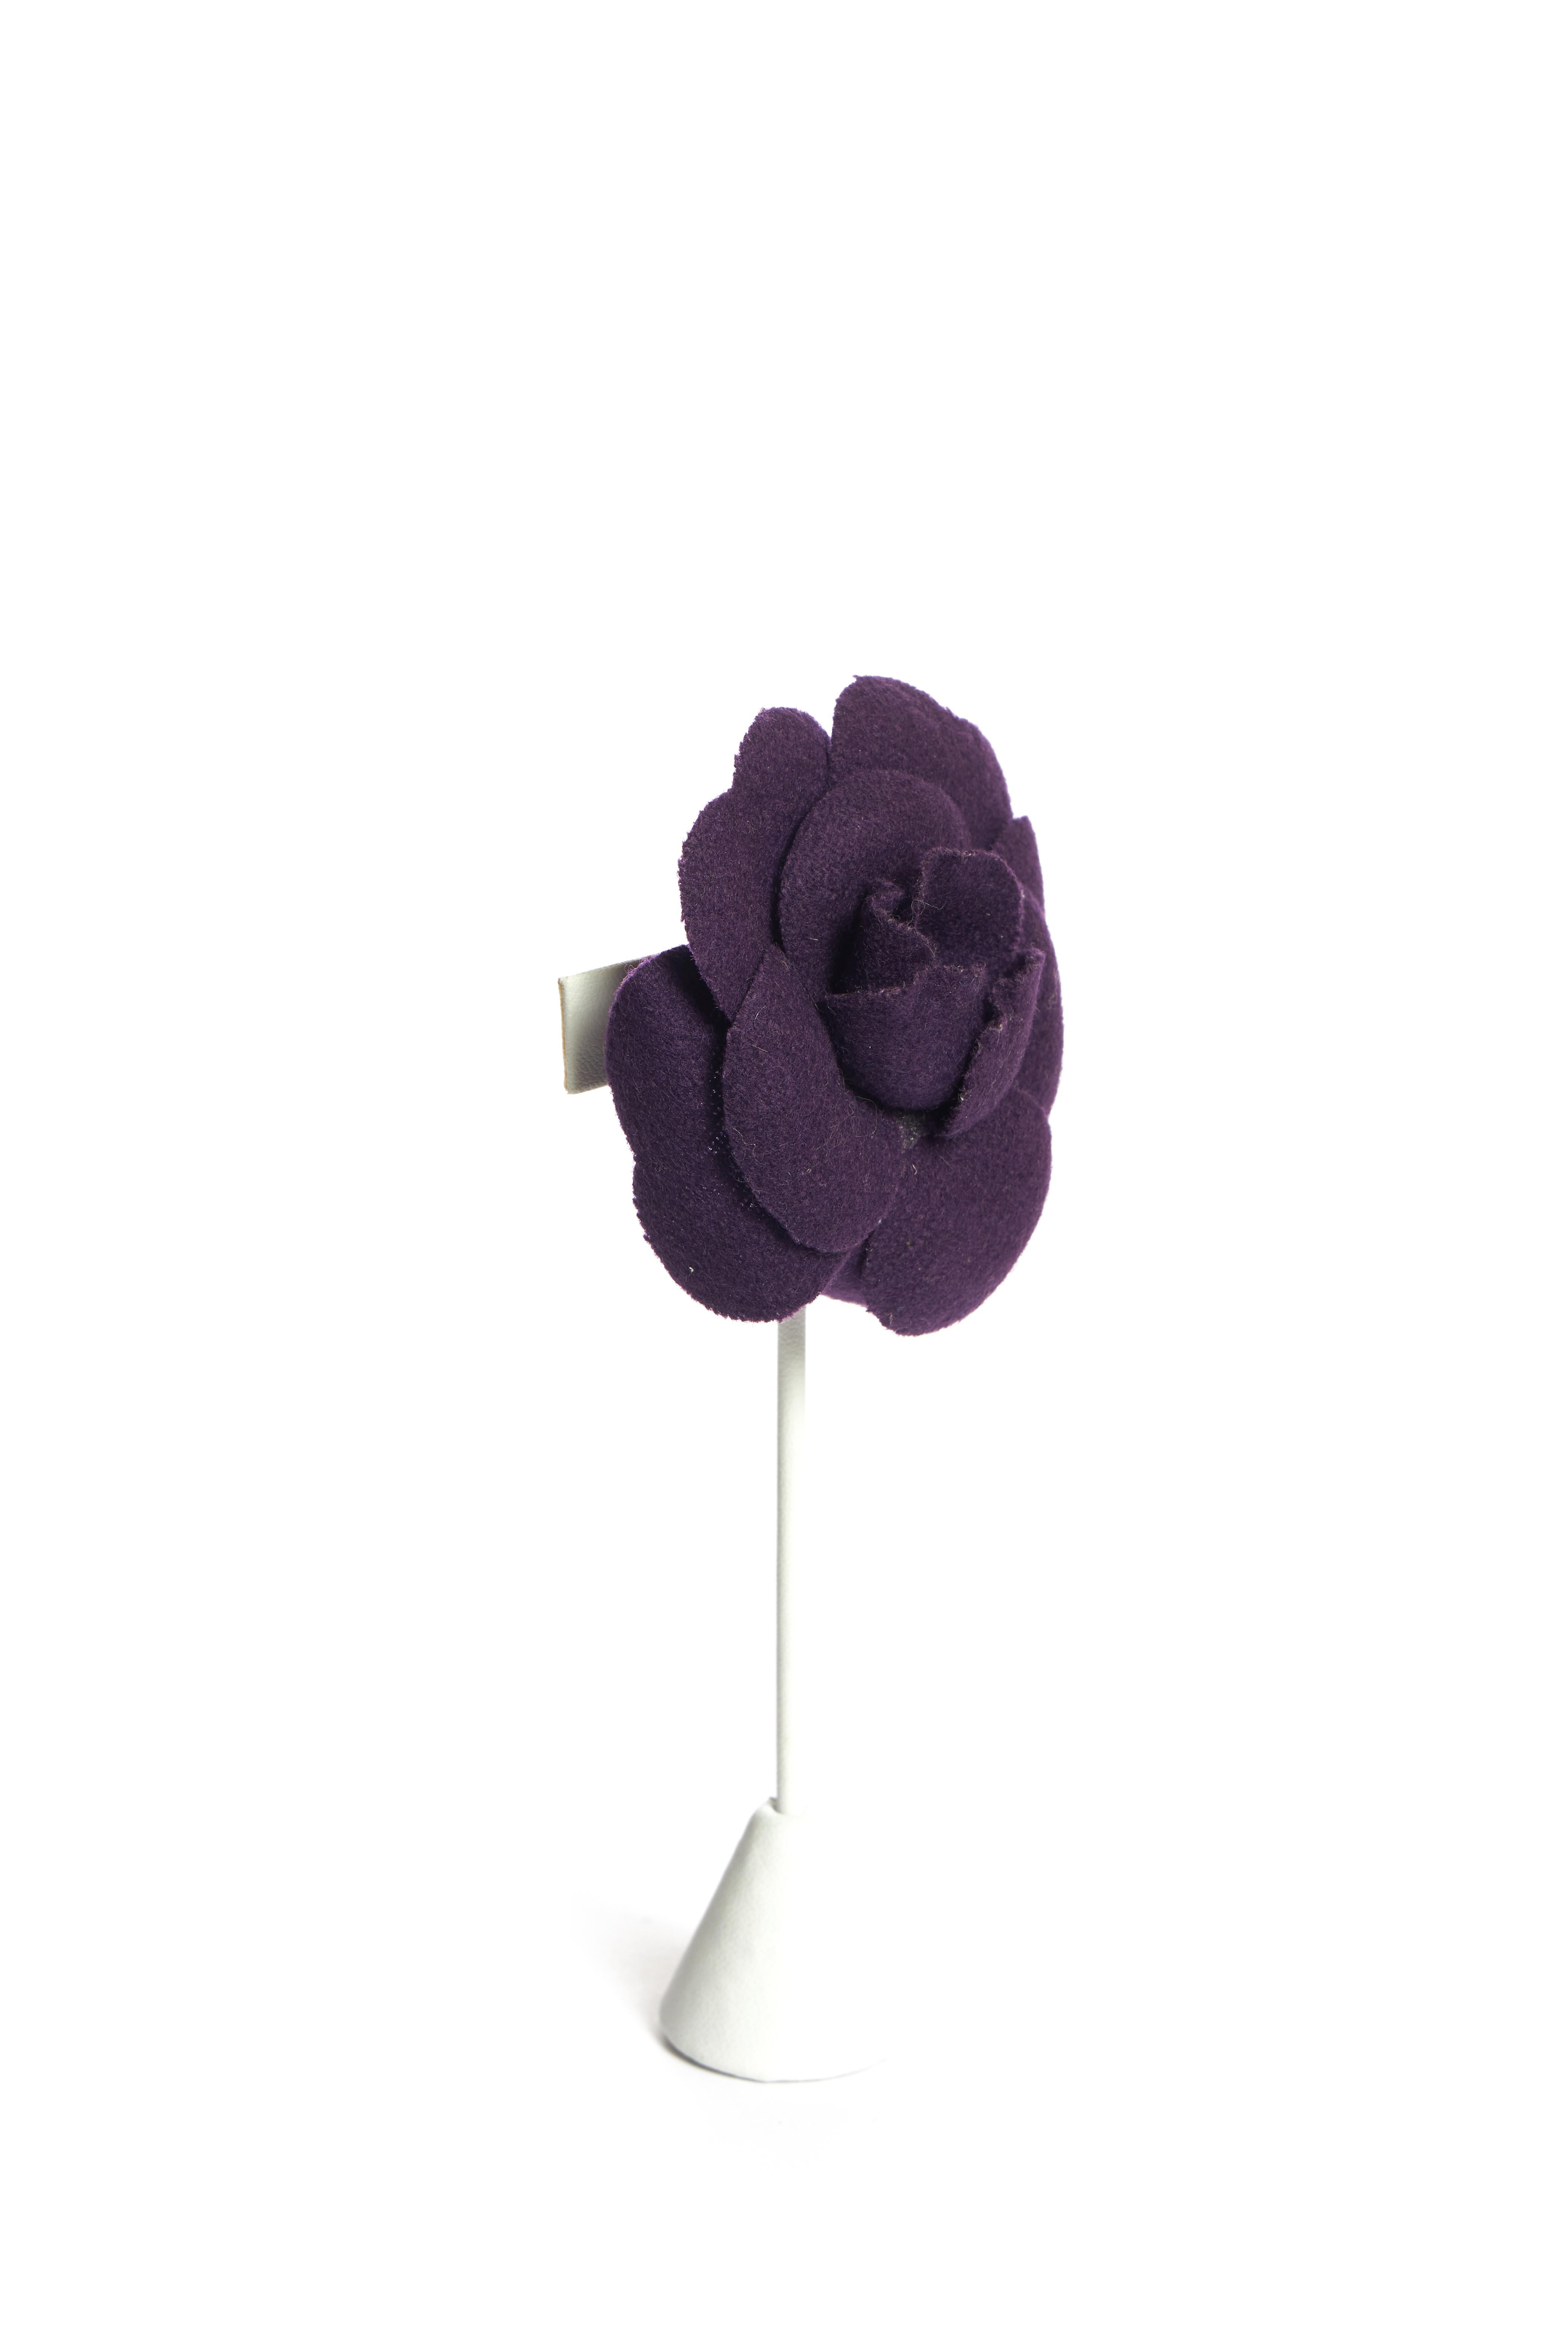 Chanel purple felt camellia pin. Minor wear. Comes with original dust bag.